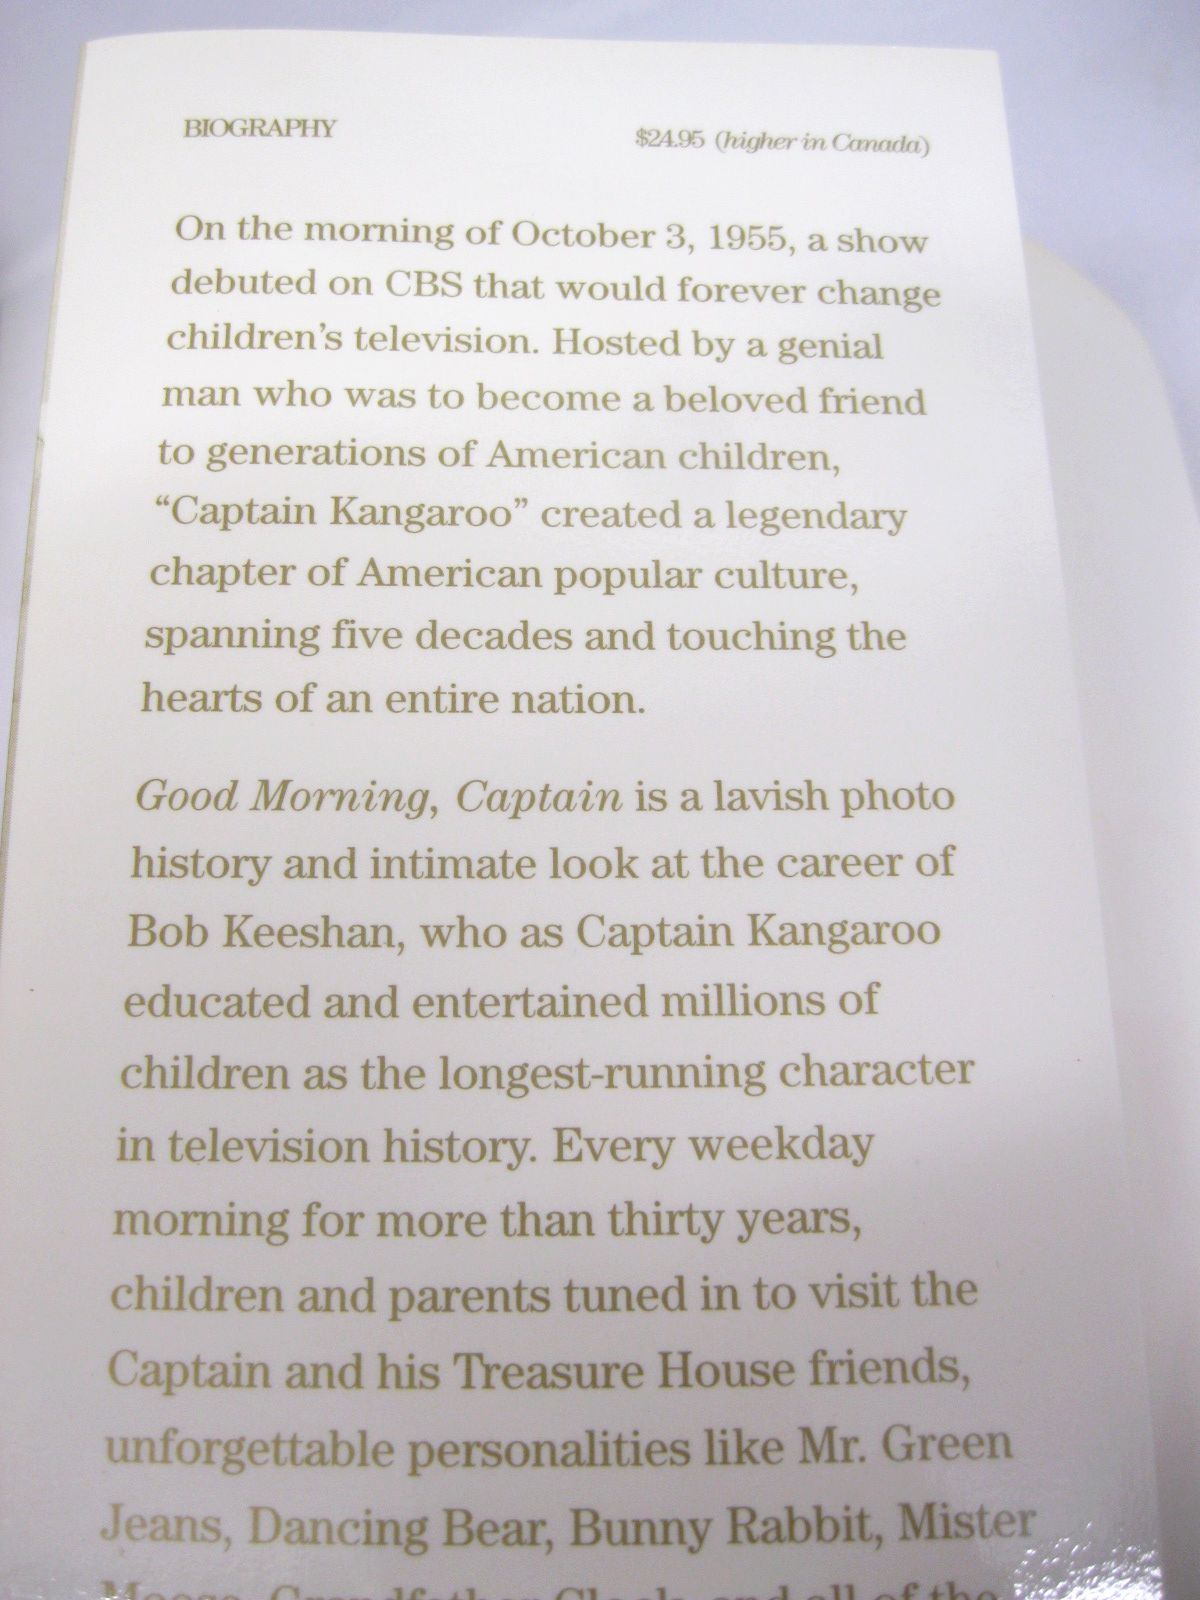 Good Morning Captain by Bob Keeshan, TV's Captain Kangaroo